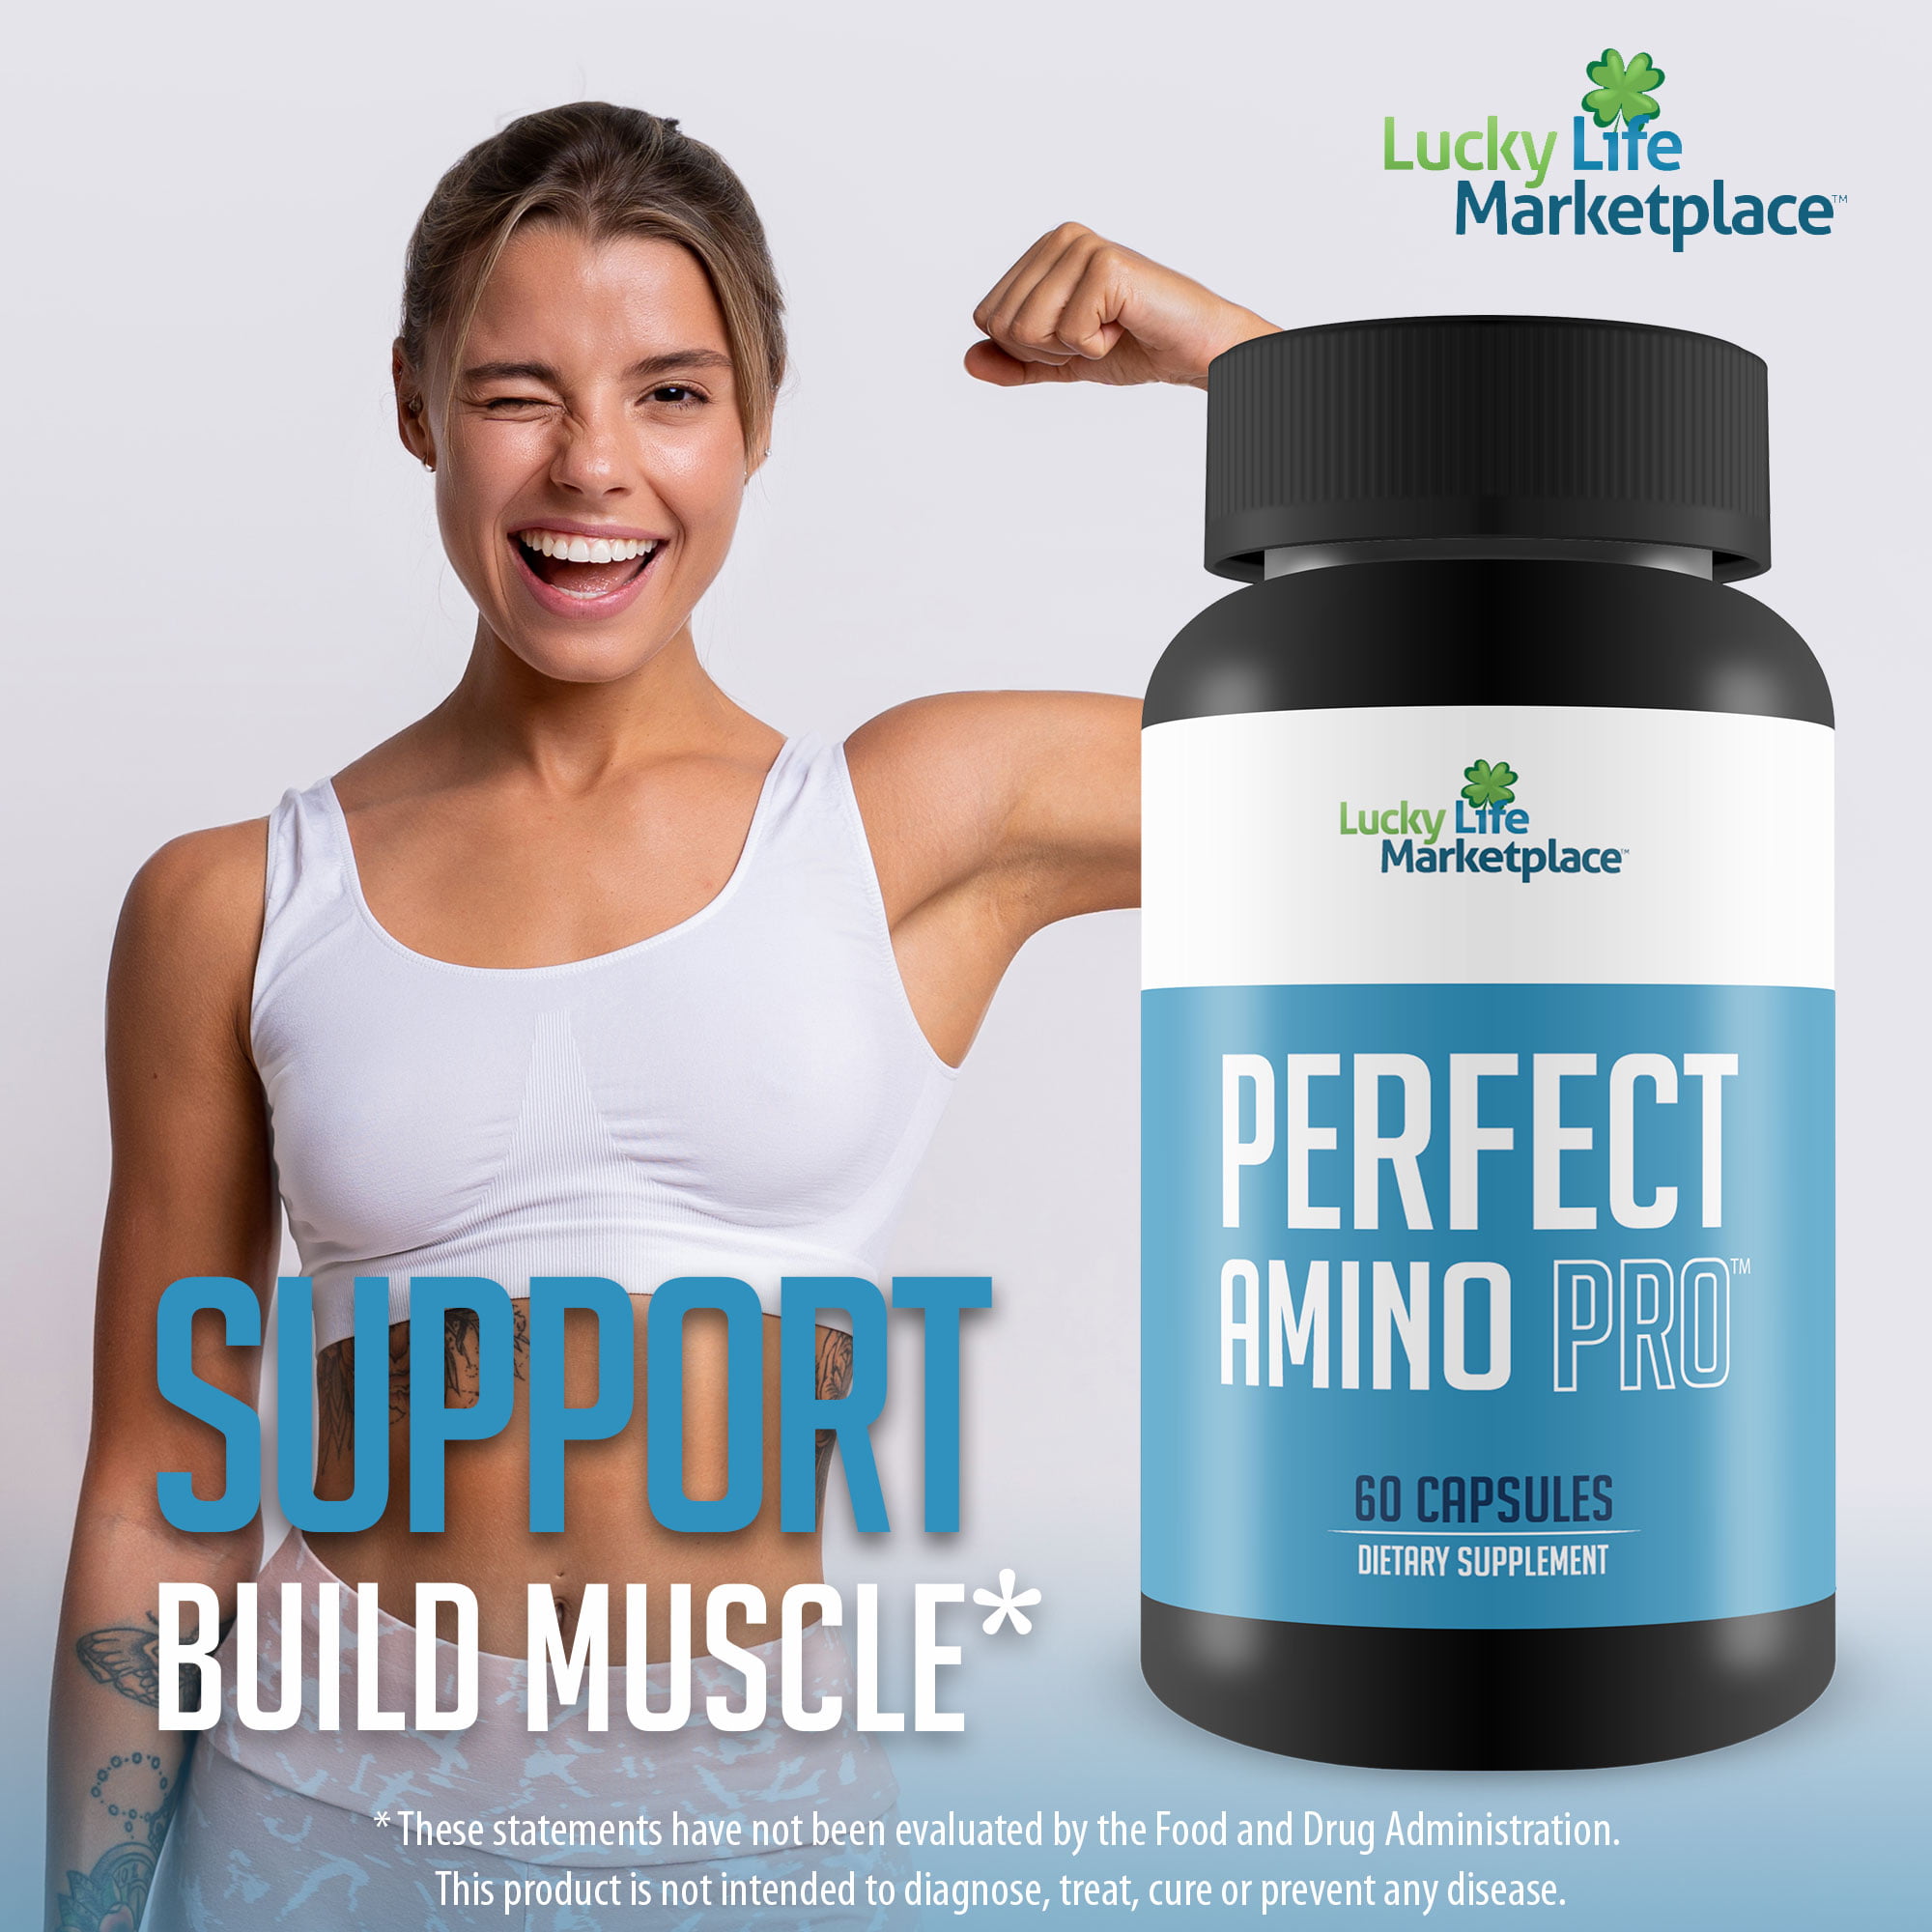 BulkSupplements.com Essential Amino Acids Powder, 10g - Promotes Muscle &  Strength Building (5KG - 500 Serv) 